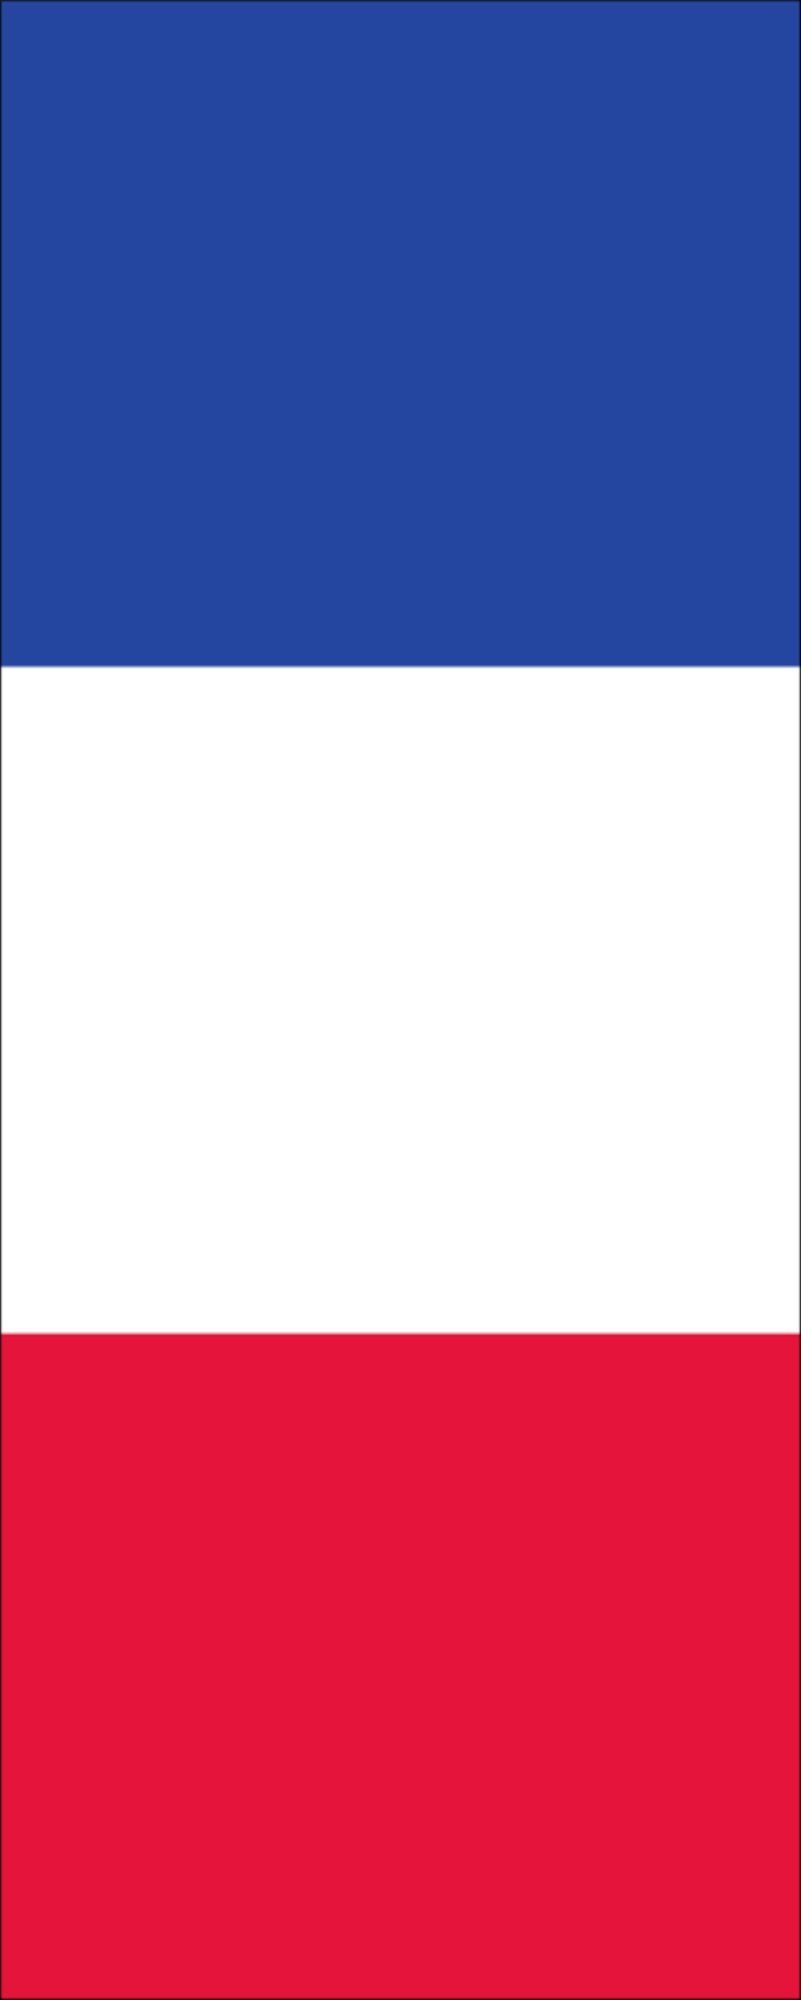 Frankreich Flagge flaggenmeer g/m² Flagge 110 Hochformat